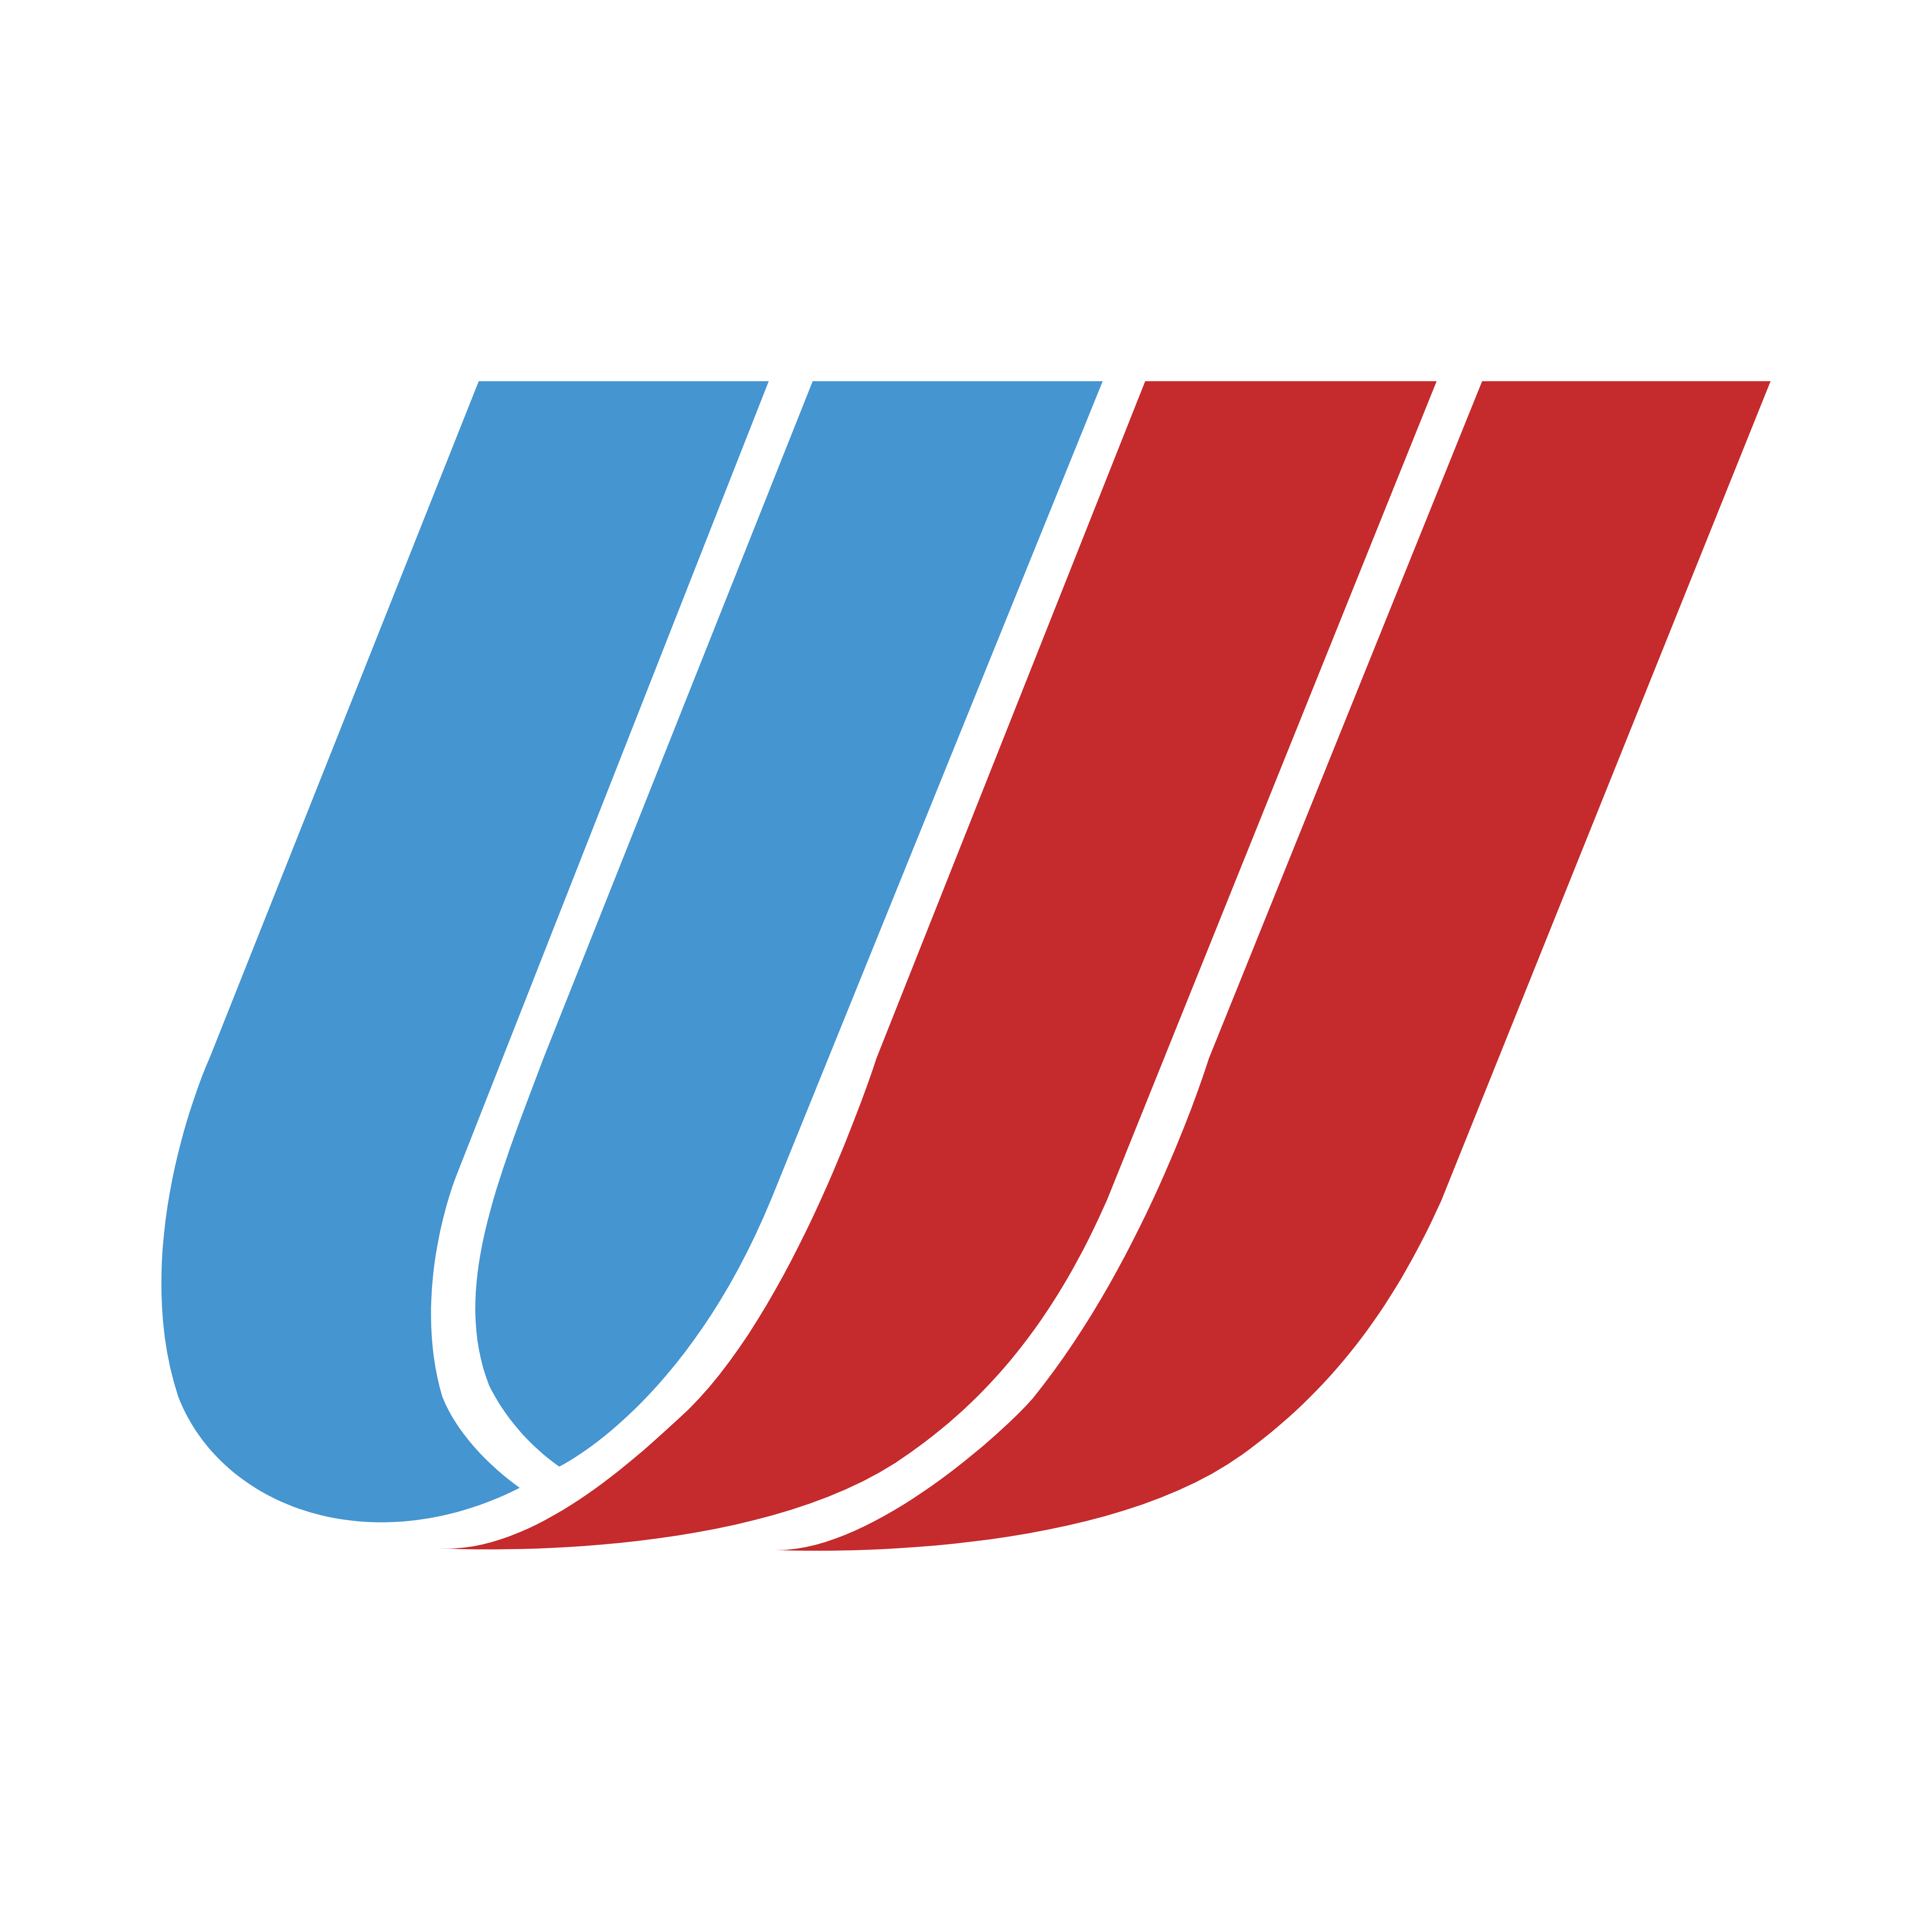 United Airlines Emblem